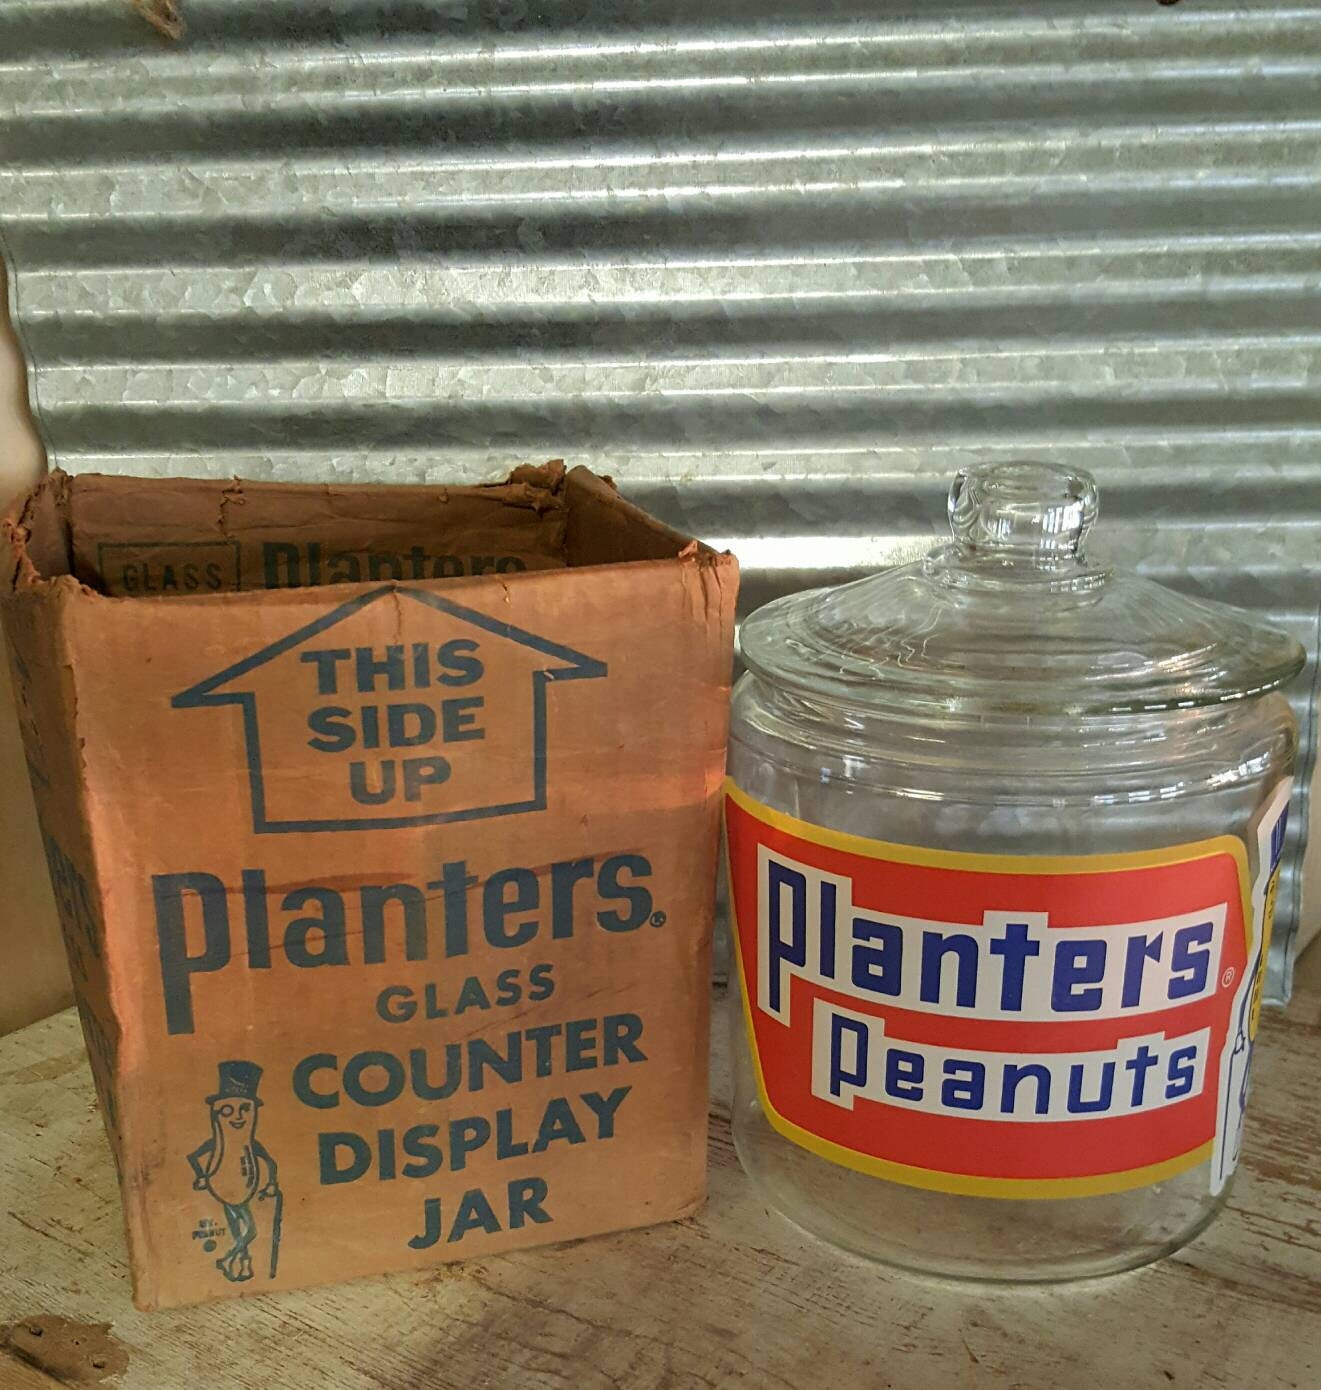 Vintage Planters Mr. Peanut glass counter display jar 19661321 x 1390